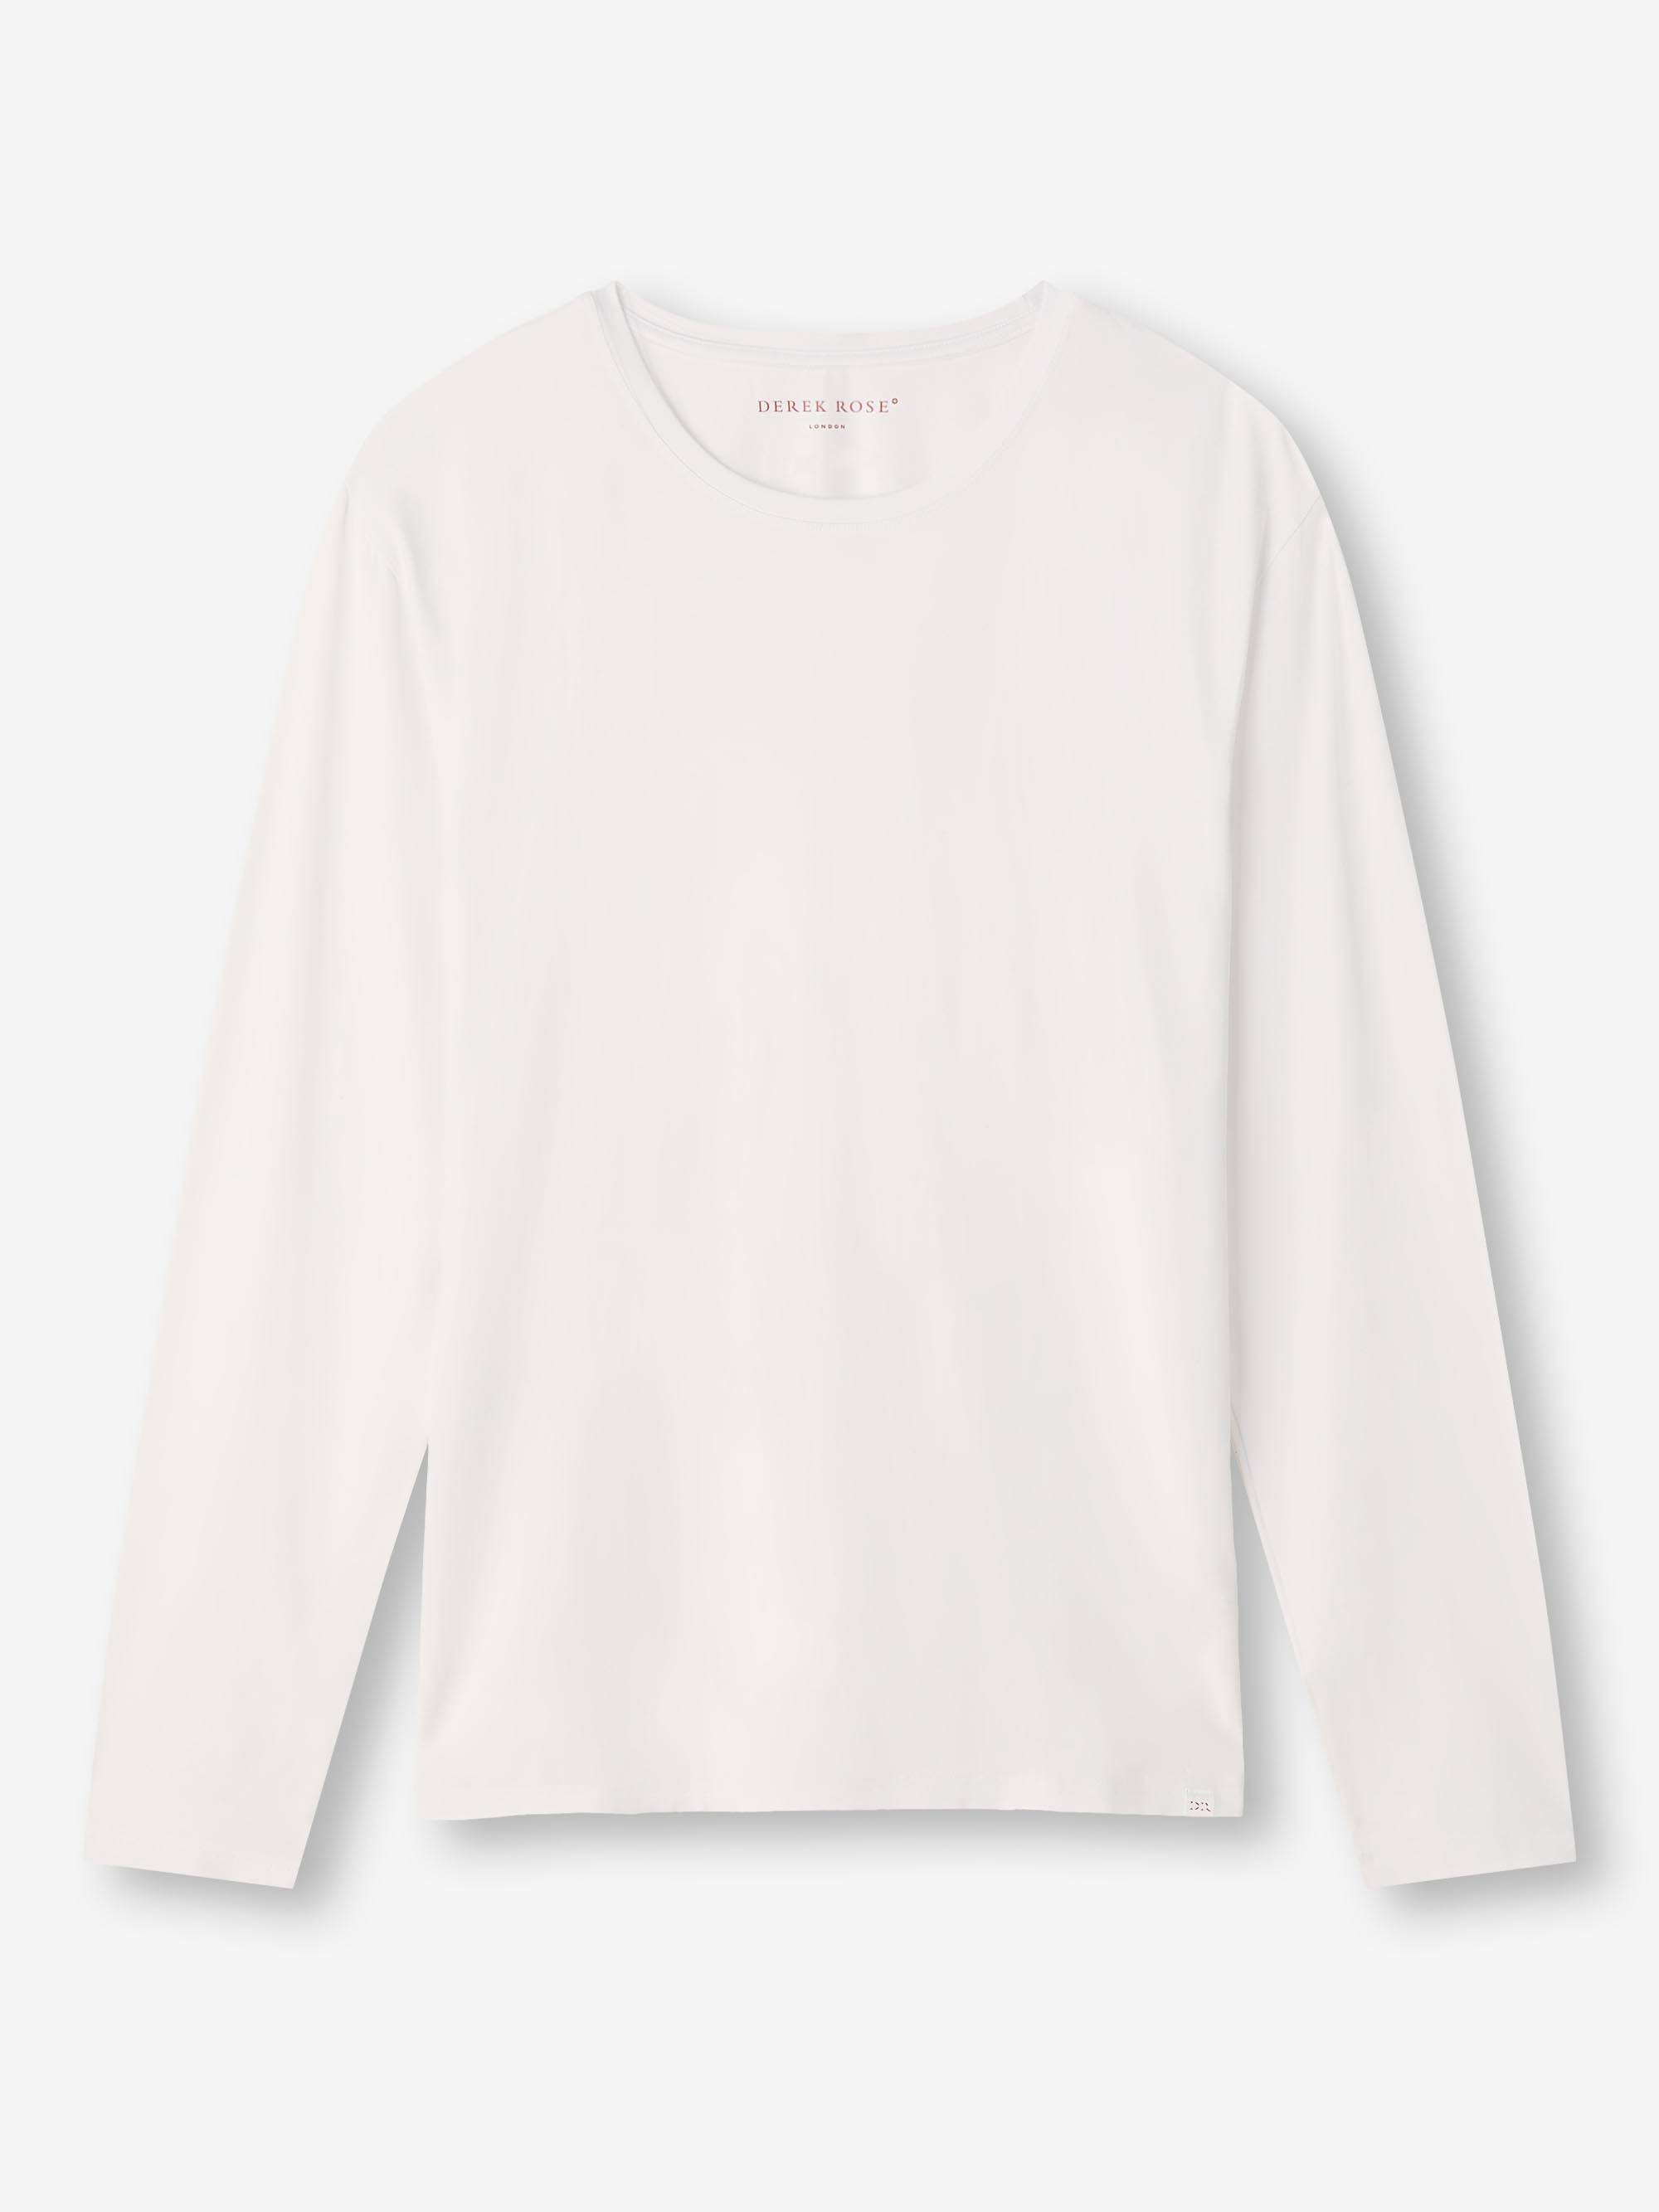 Men's Long Sleeve T-Shirt Basel Micro Modal Stretch White